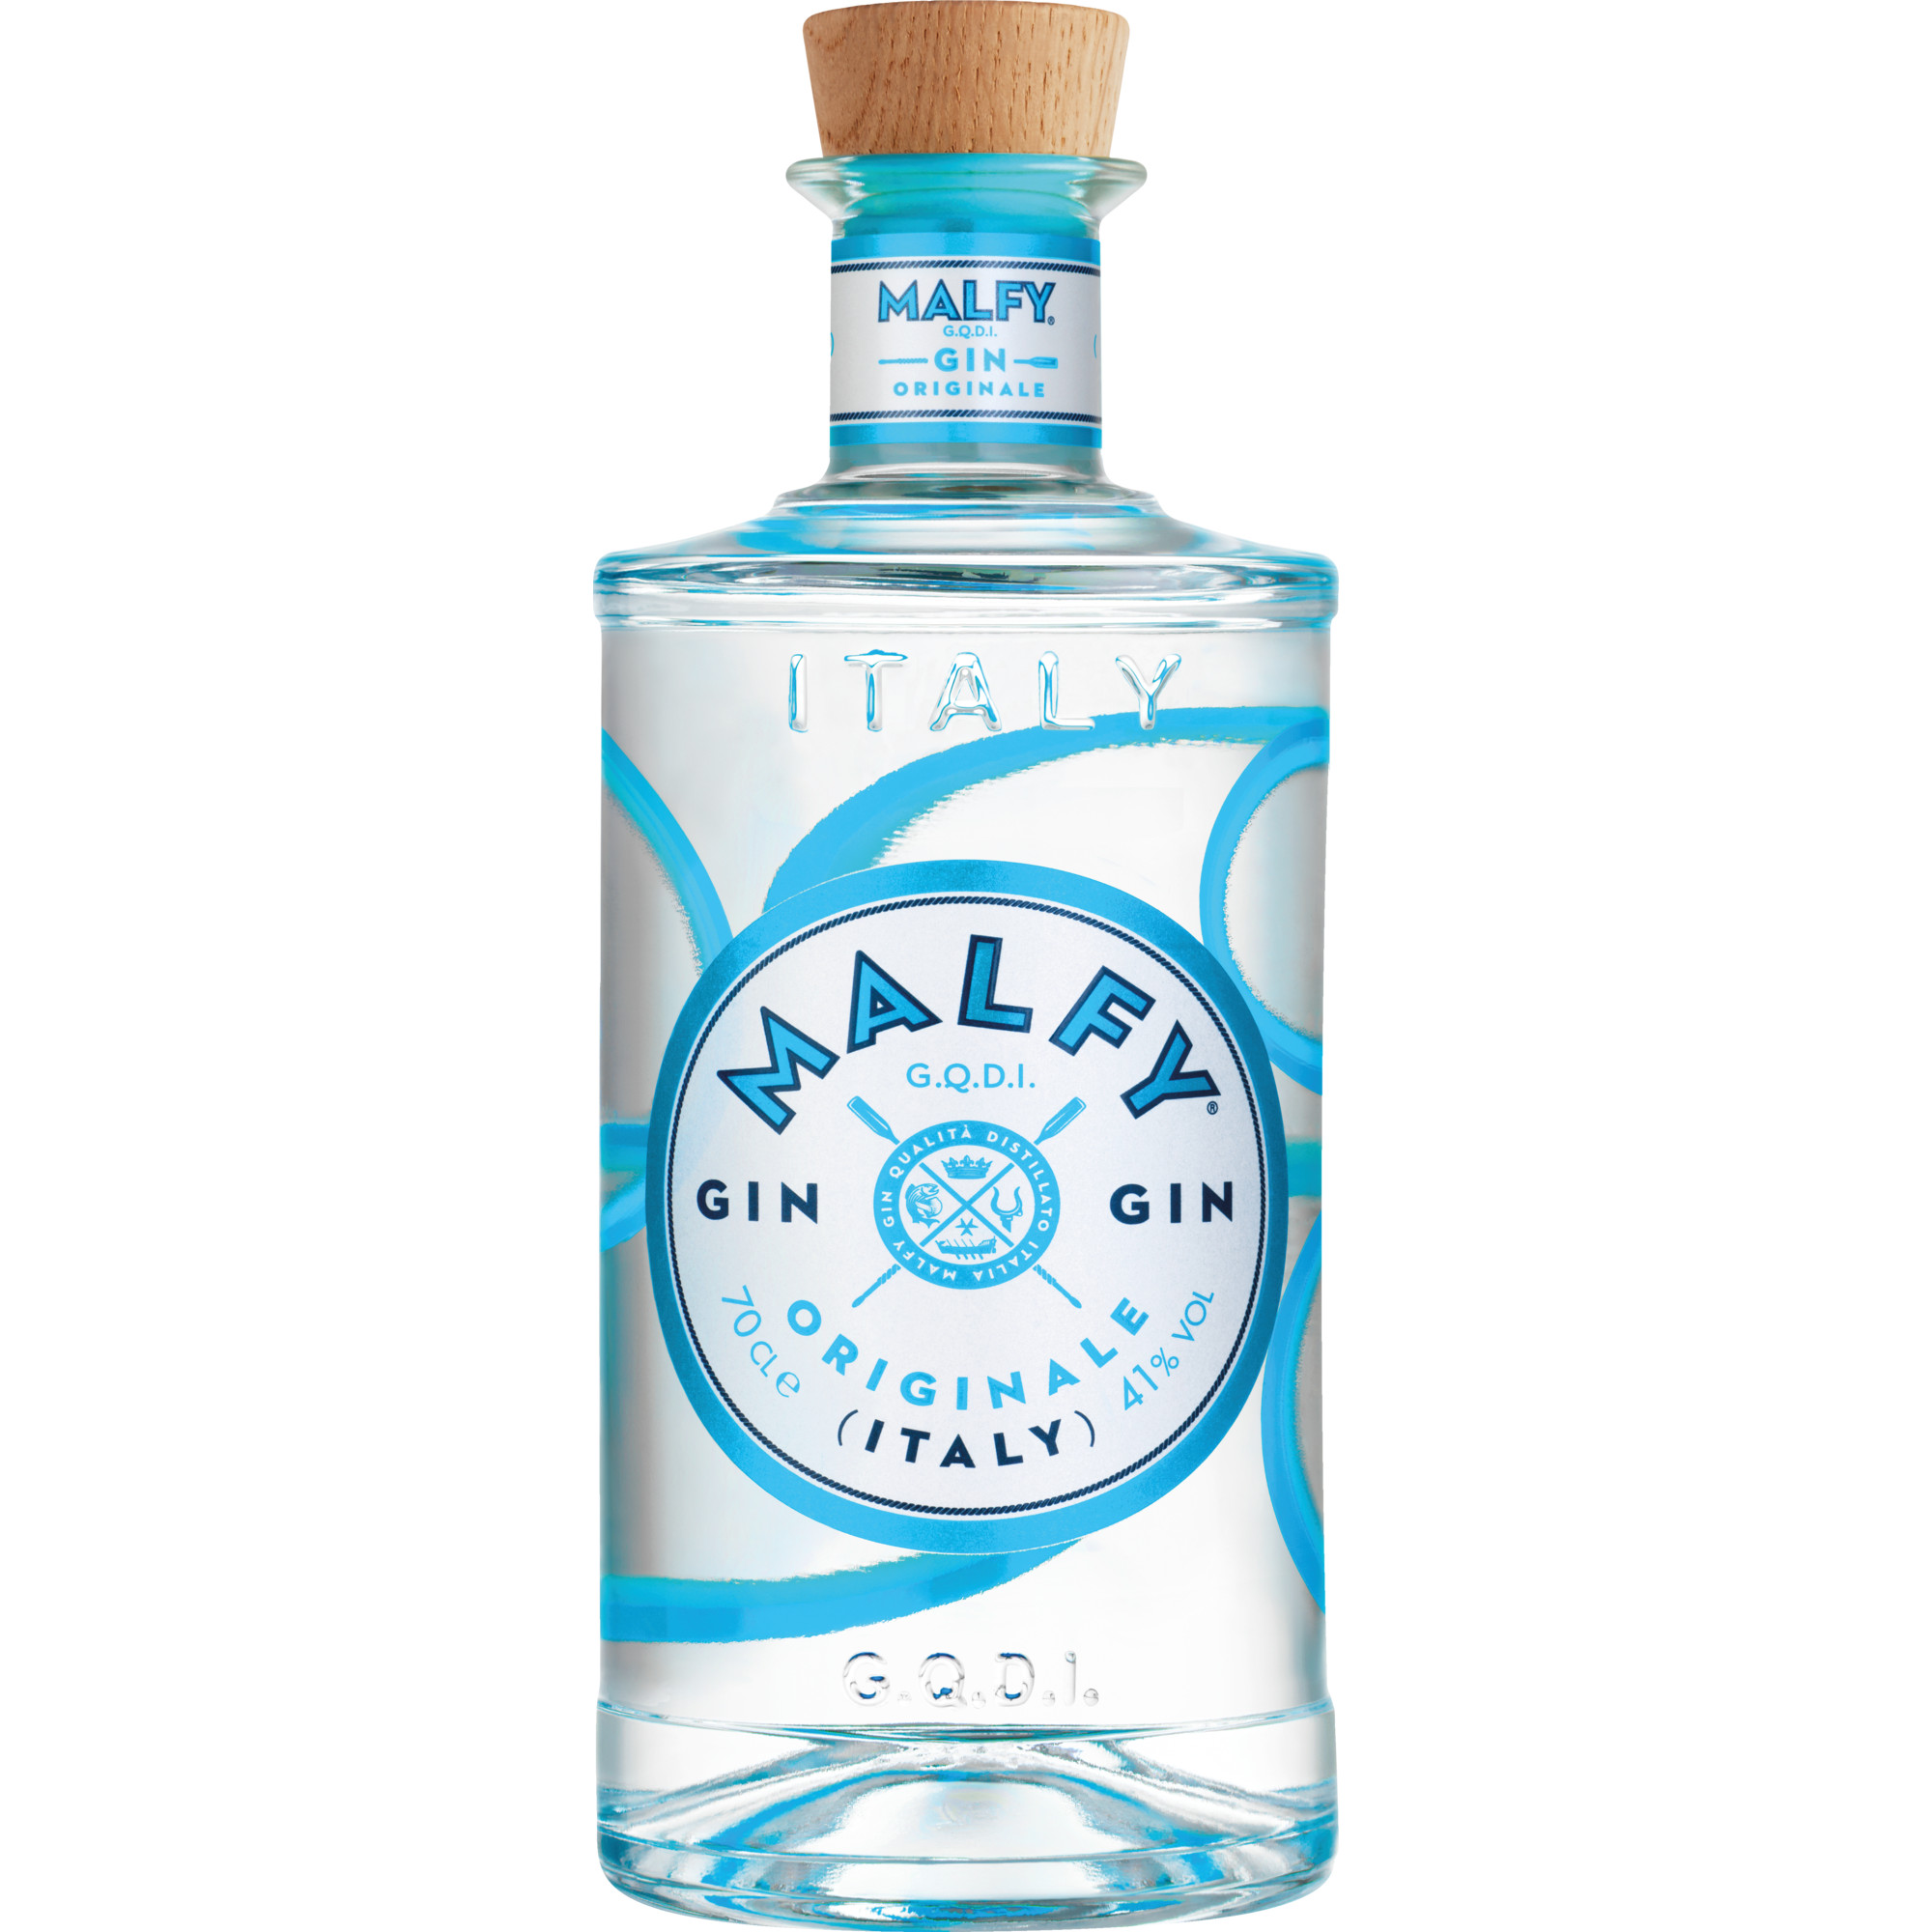 Malfy Gin Originale, Italien, 0,7 L, 41% Vol., Spirituosen  Spirituosen Hawesko